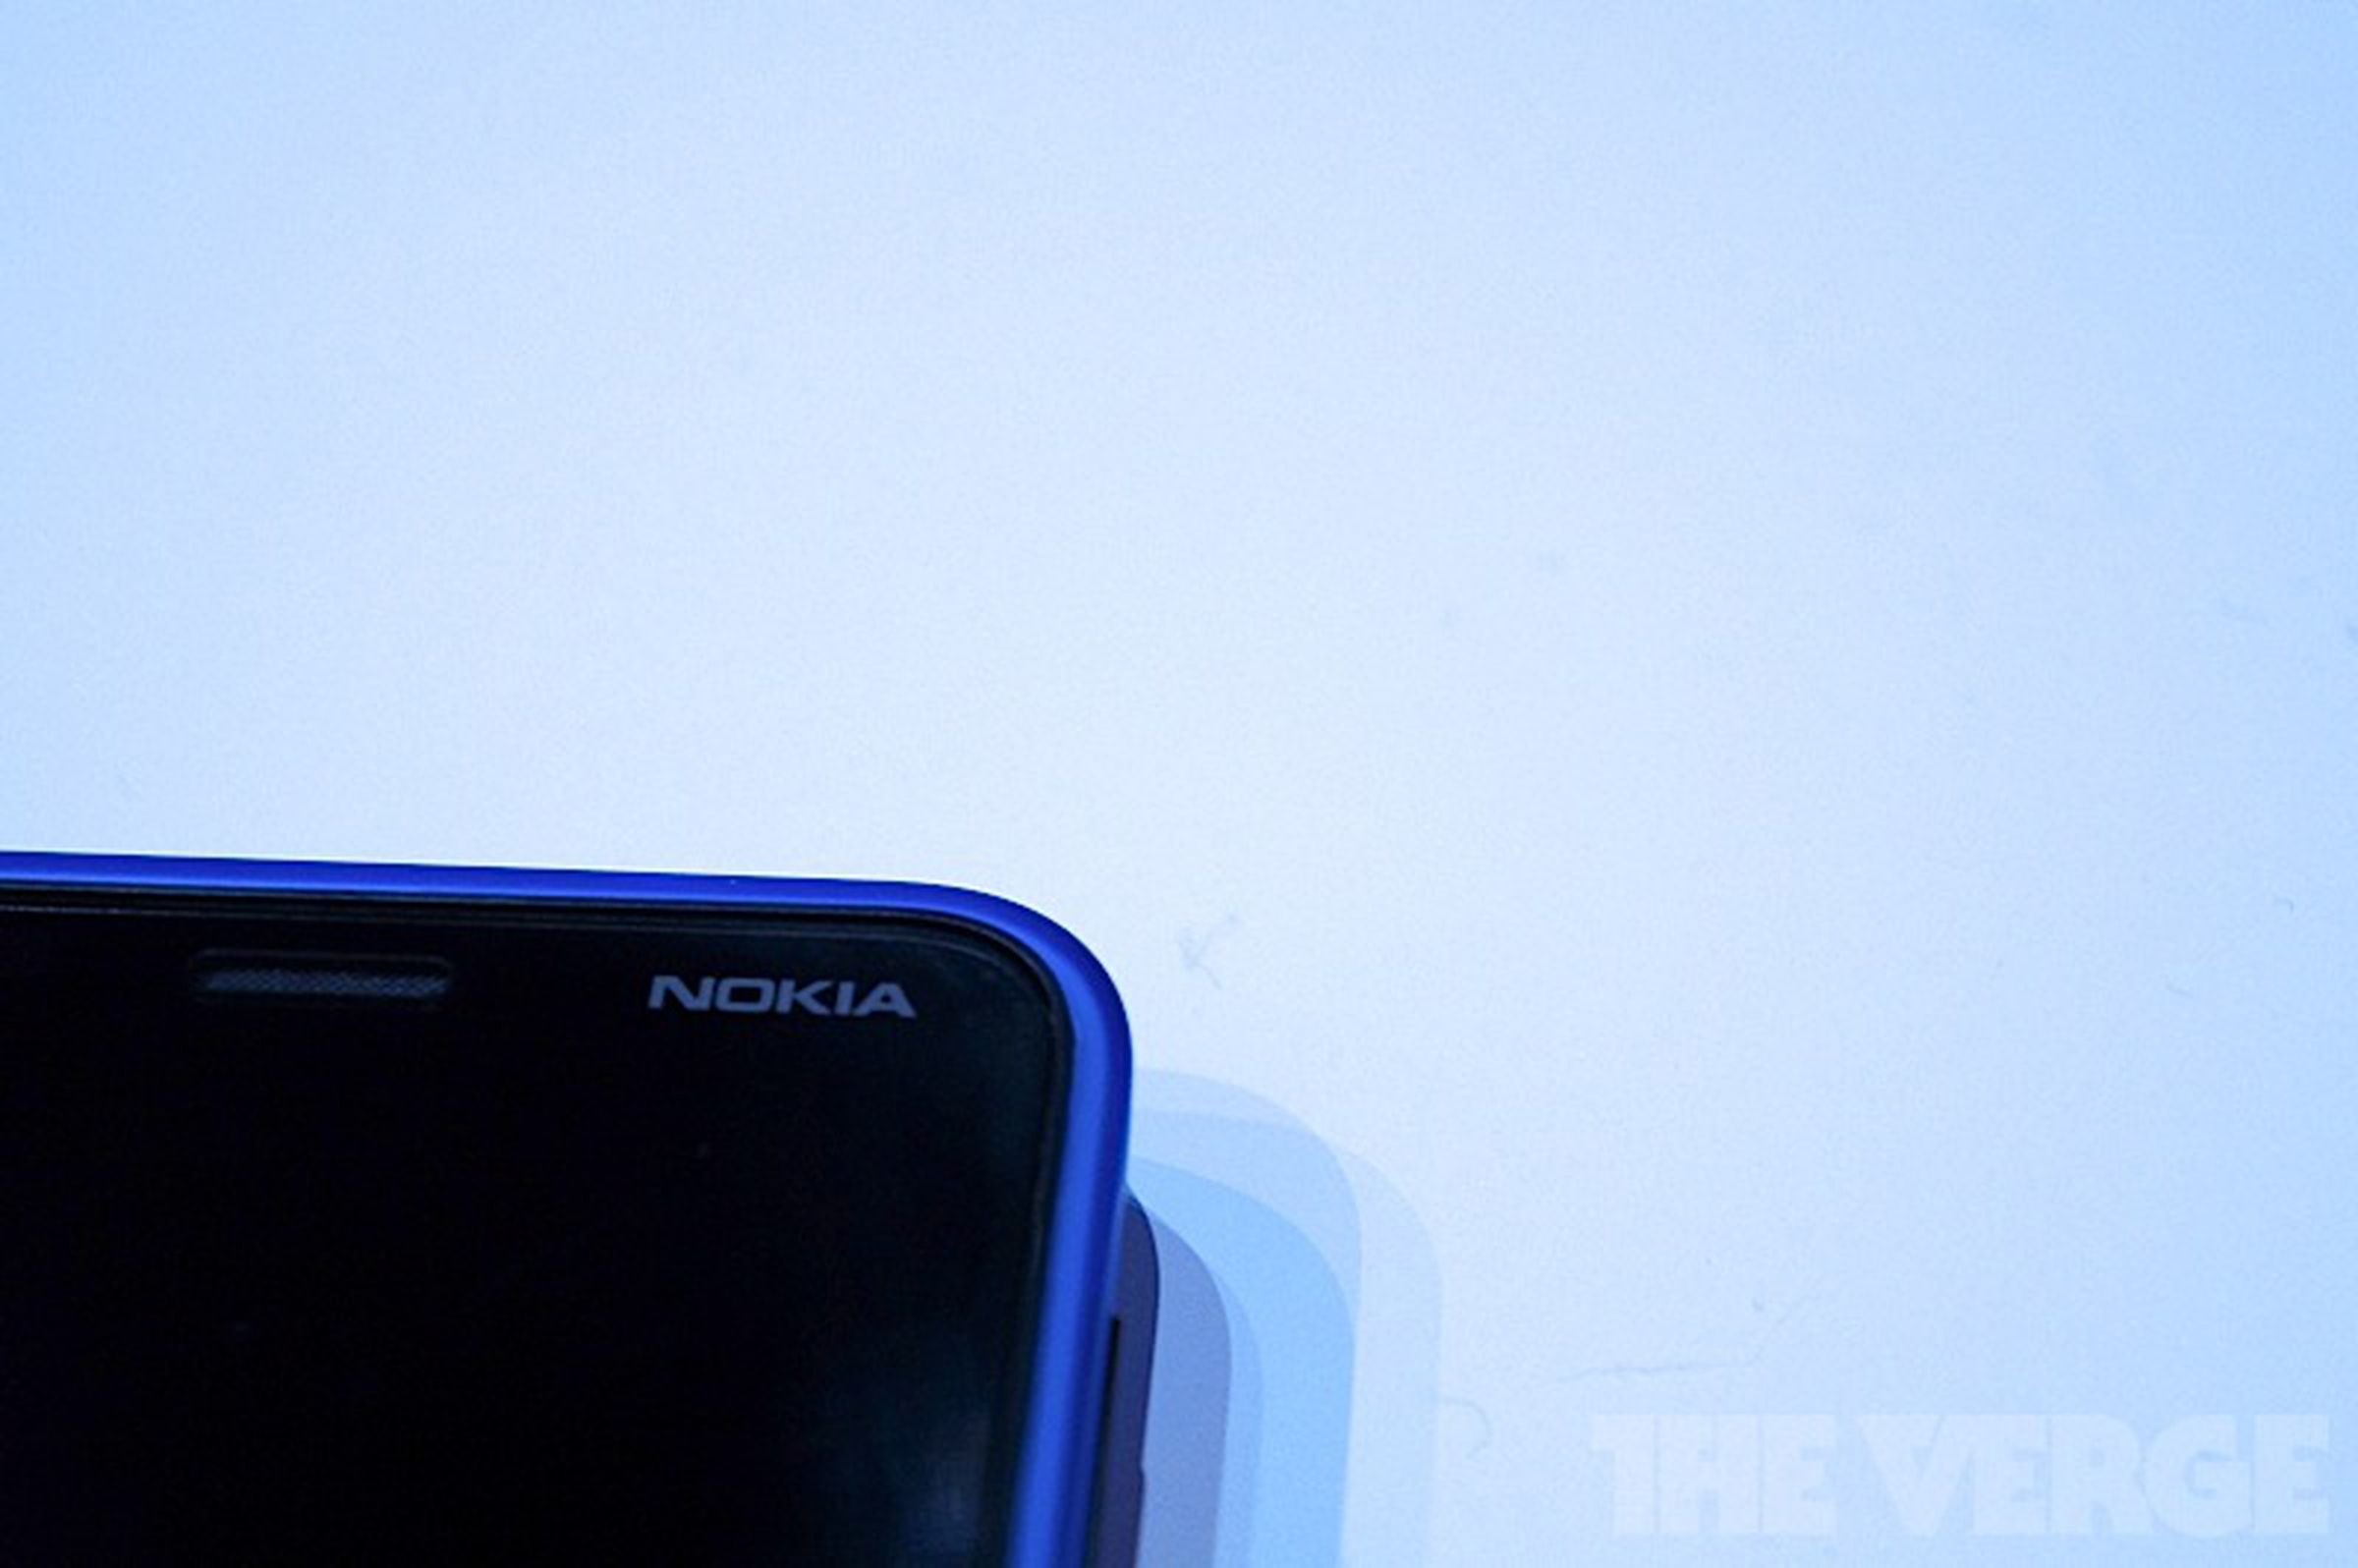 Nokia Lumia 620 hands-on gallery